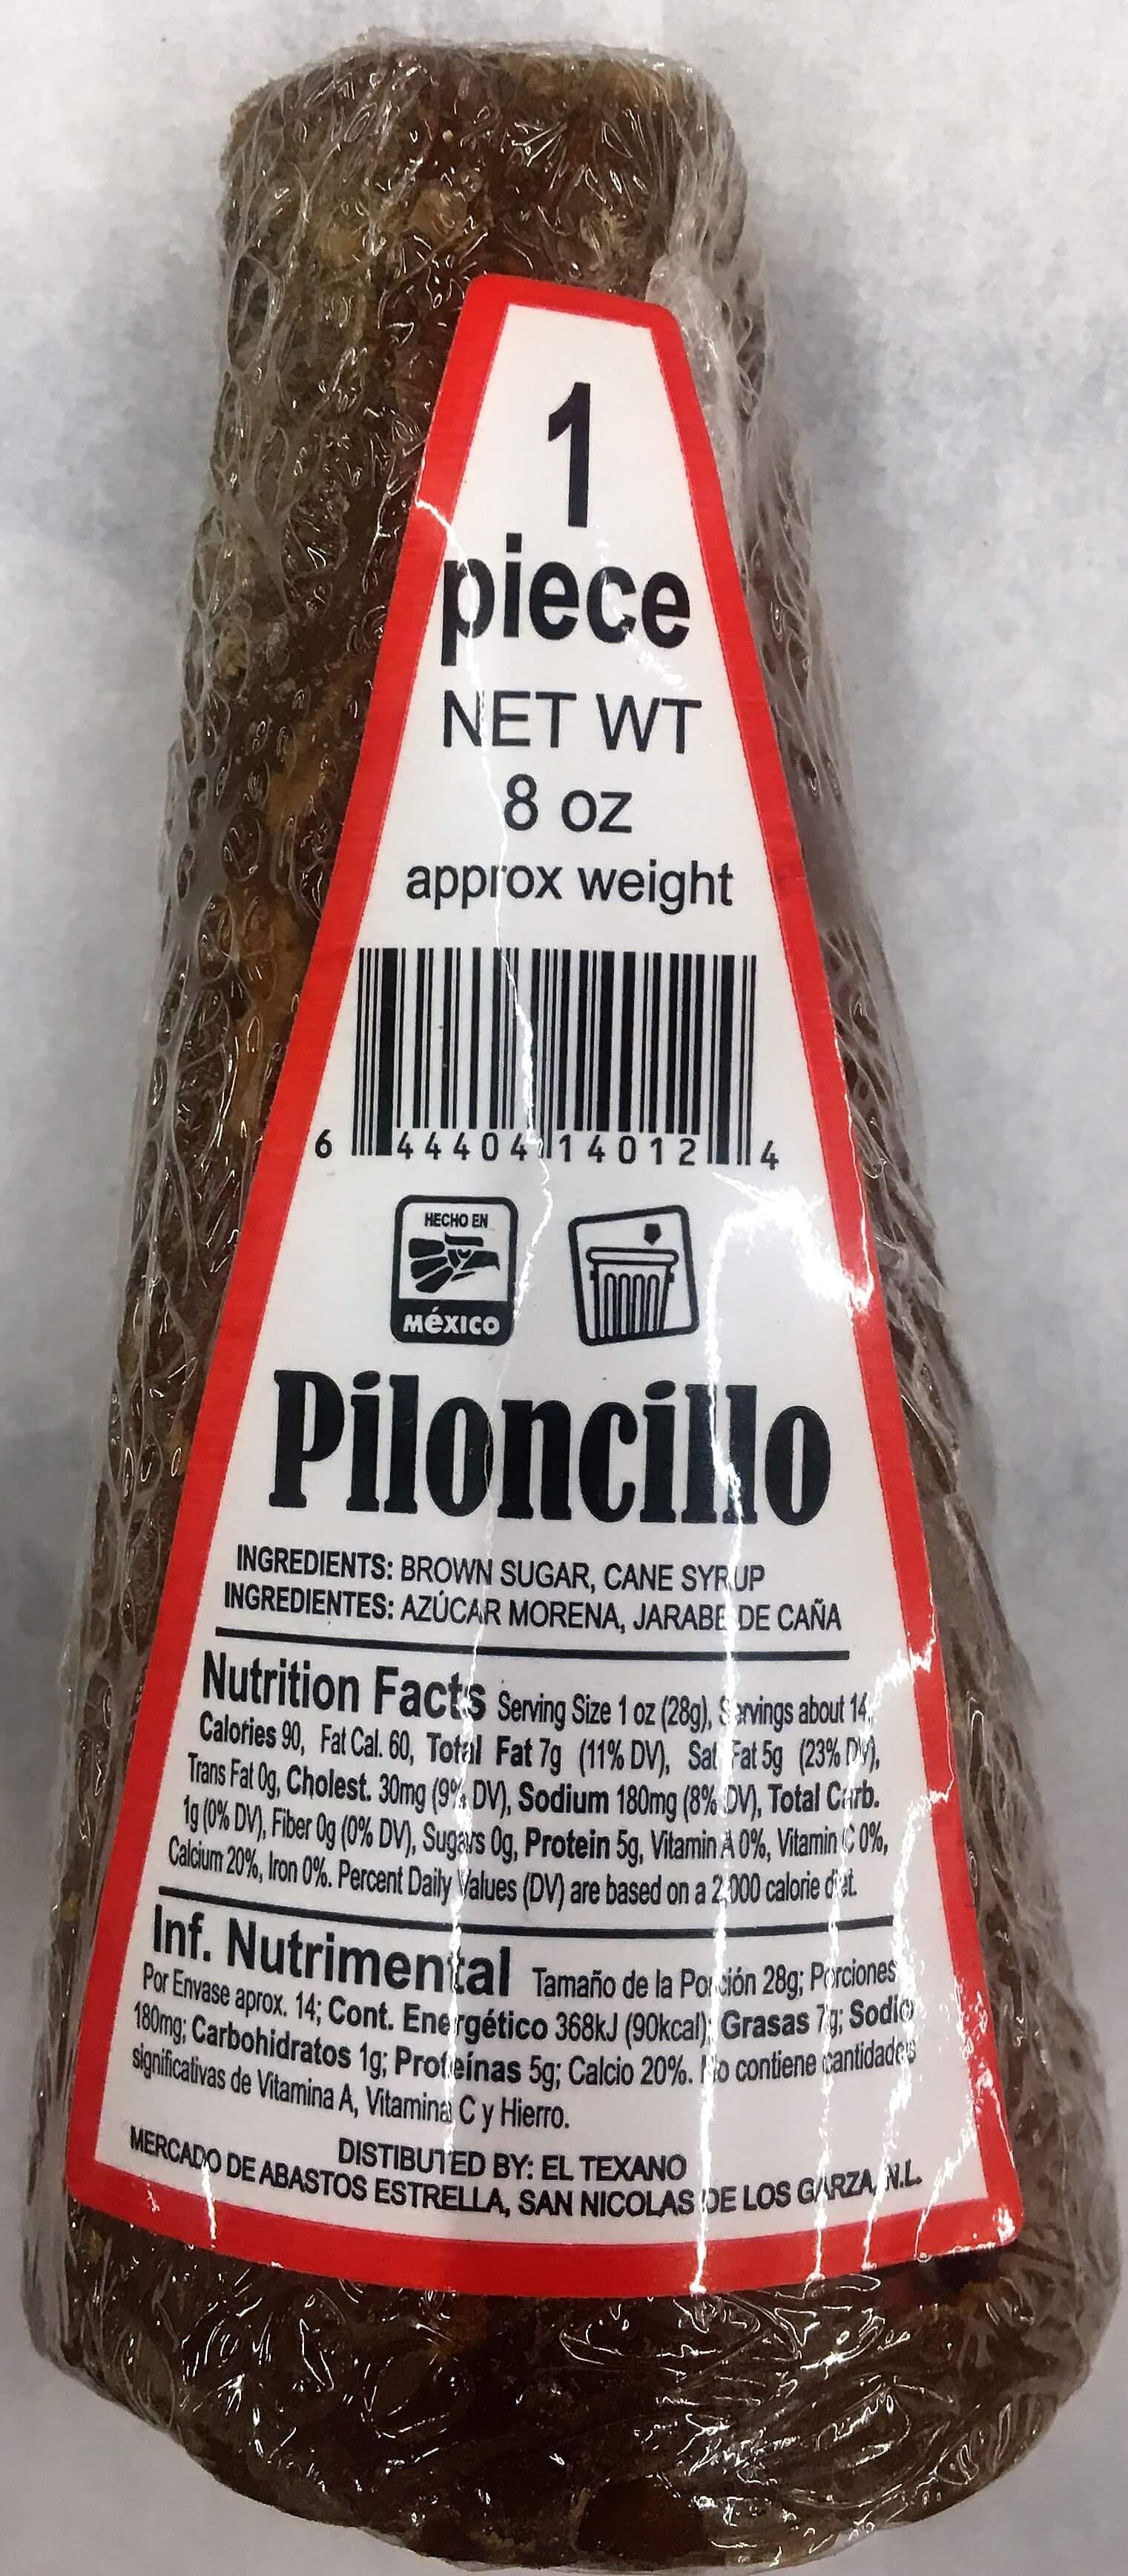 Piloncillo - Hard Cane Sugar 1 Piece 8 oz